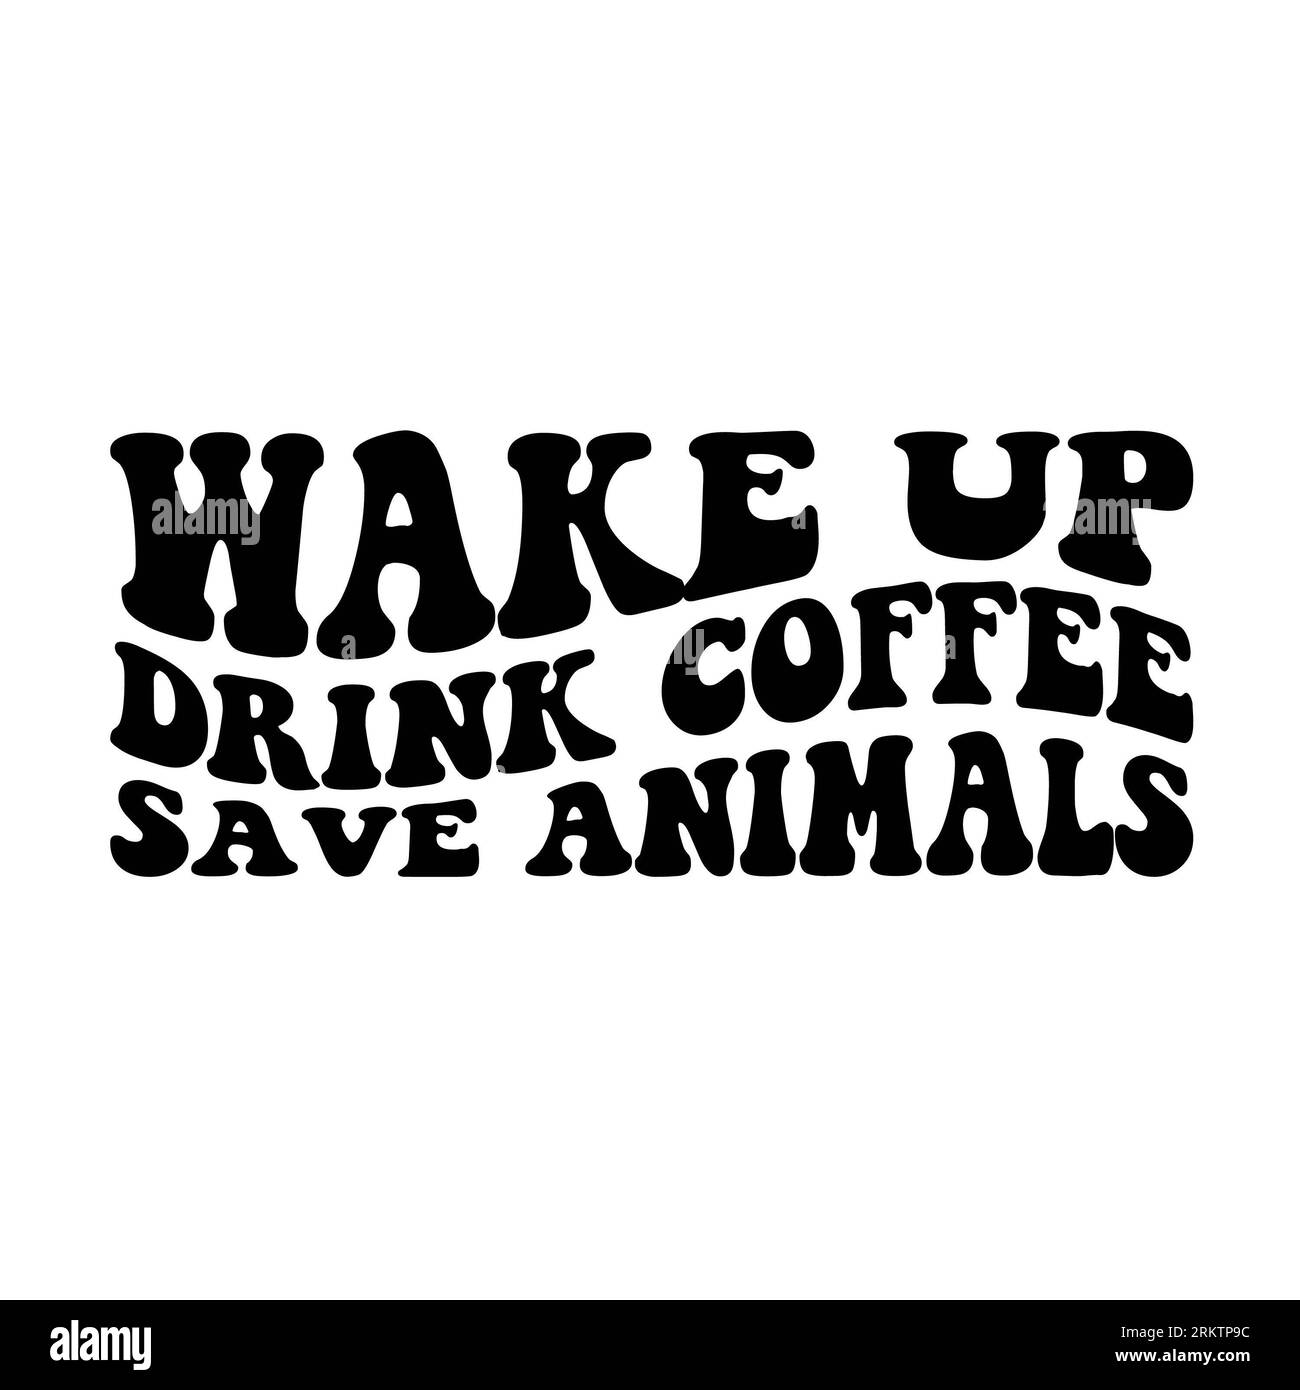 Wake up, drink coffee, save animals wavy stacked on white background. Isolated illustration. Stock Photo